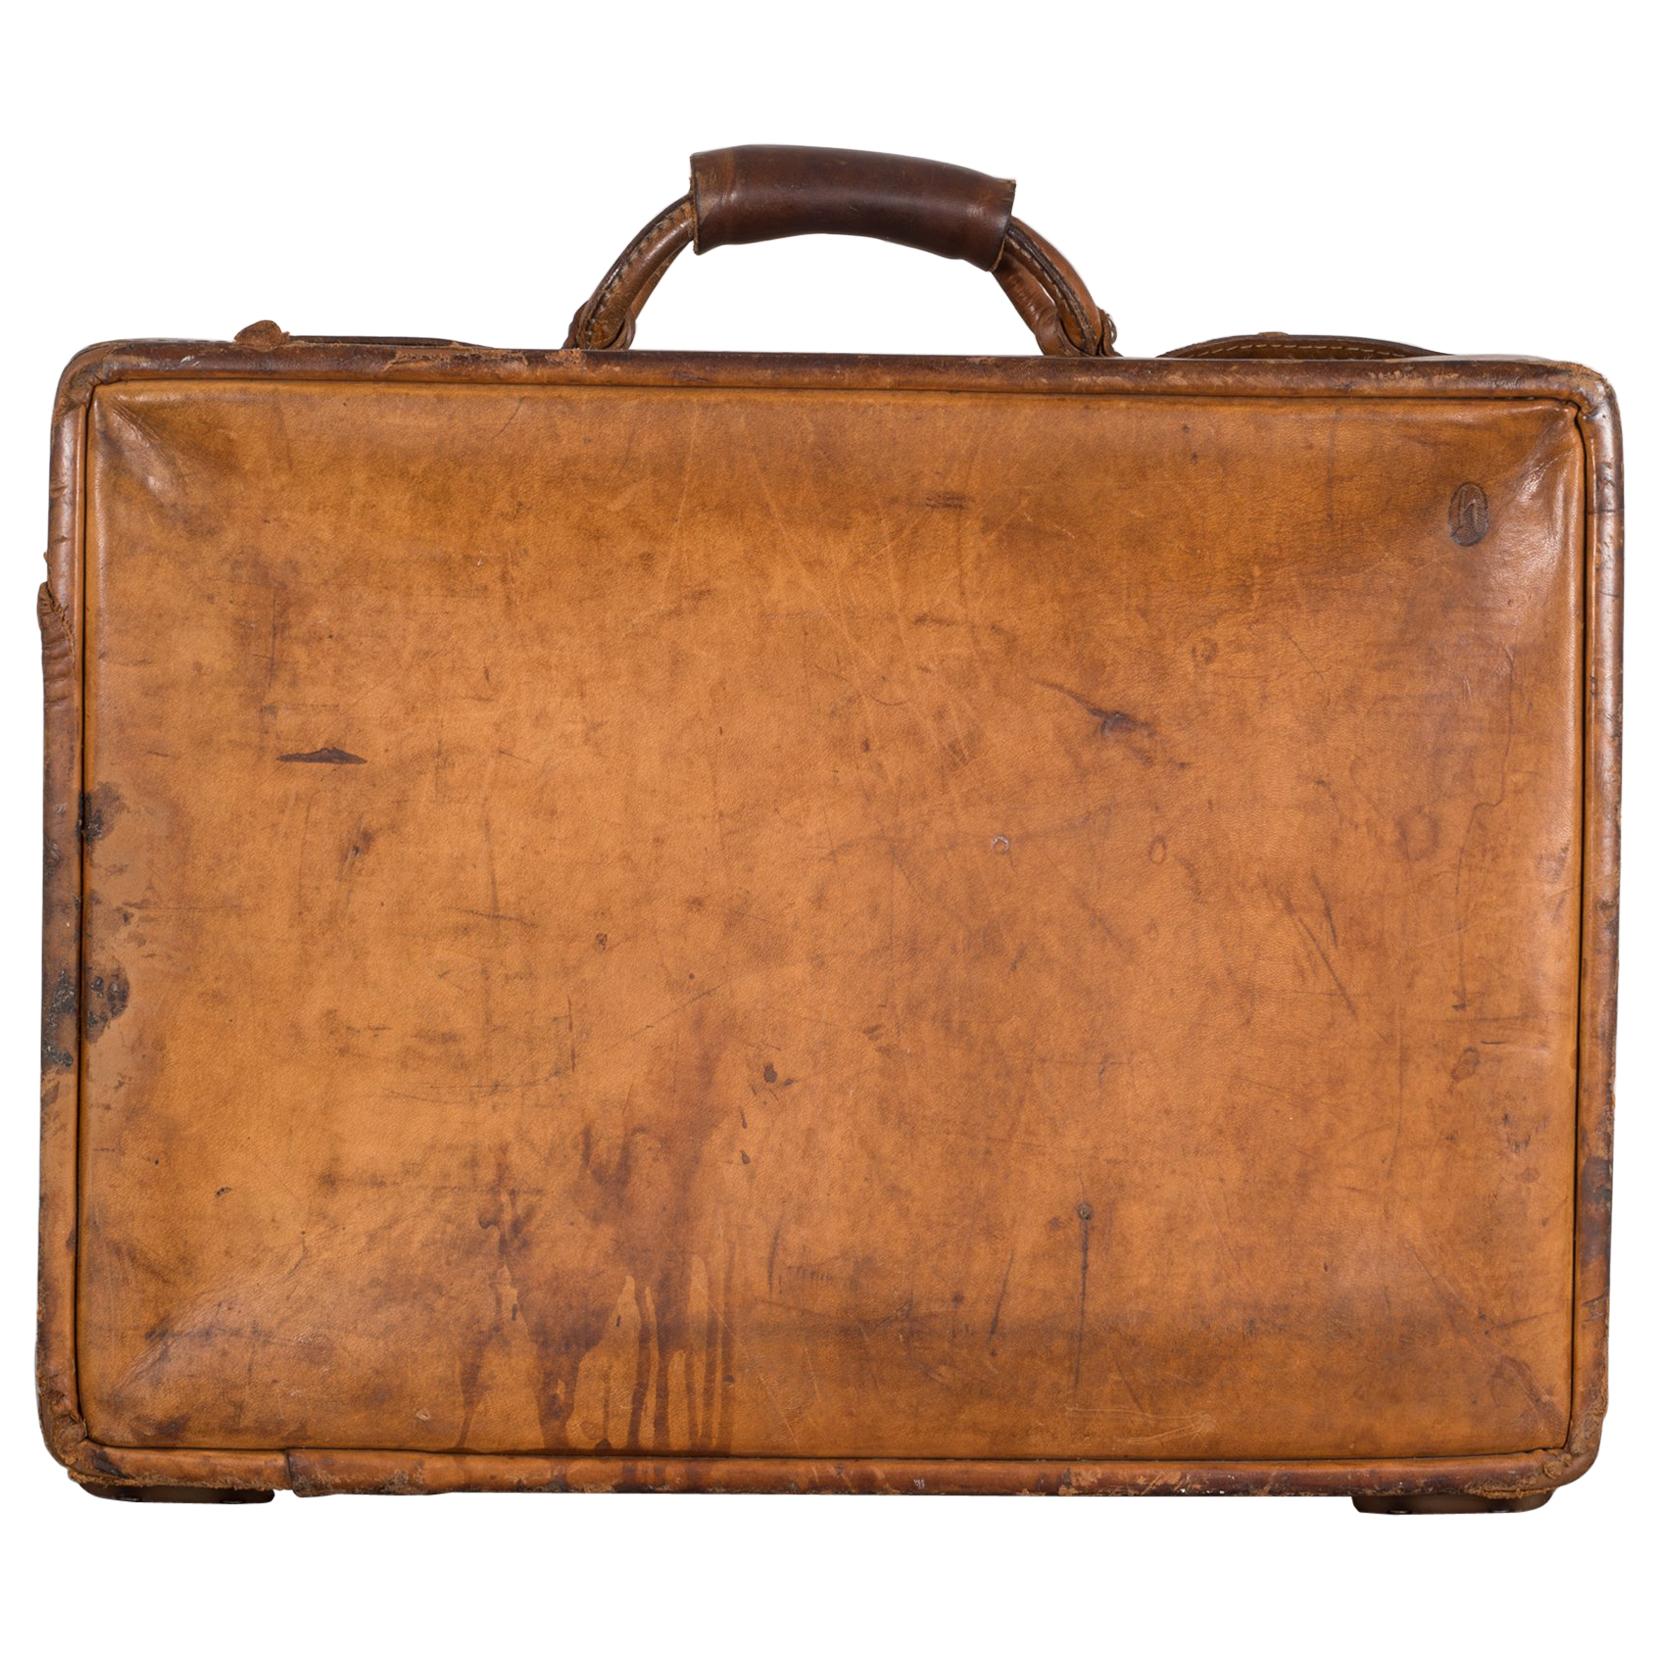 Leather Hartman Luggage Briefcase, circa 1950